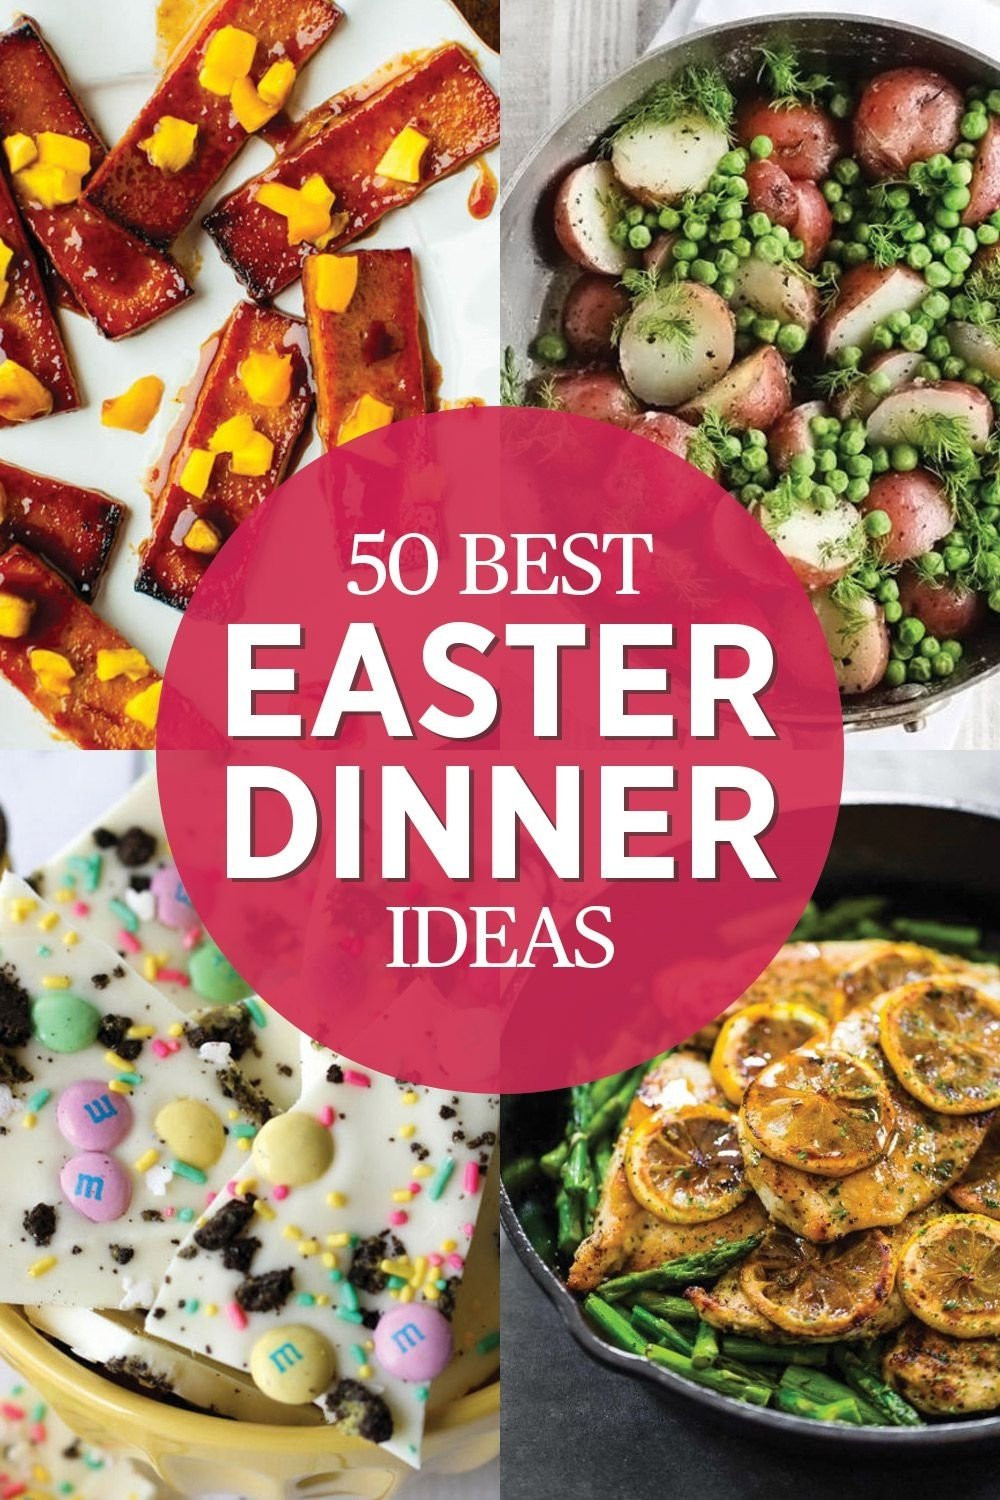 Easy Easter Menu Ideas
 10 Fashionable Easter Sunday Dinner Menu Ideas 2021